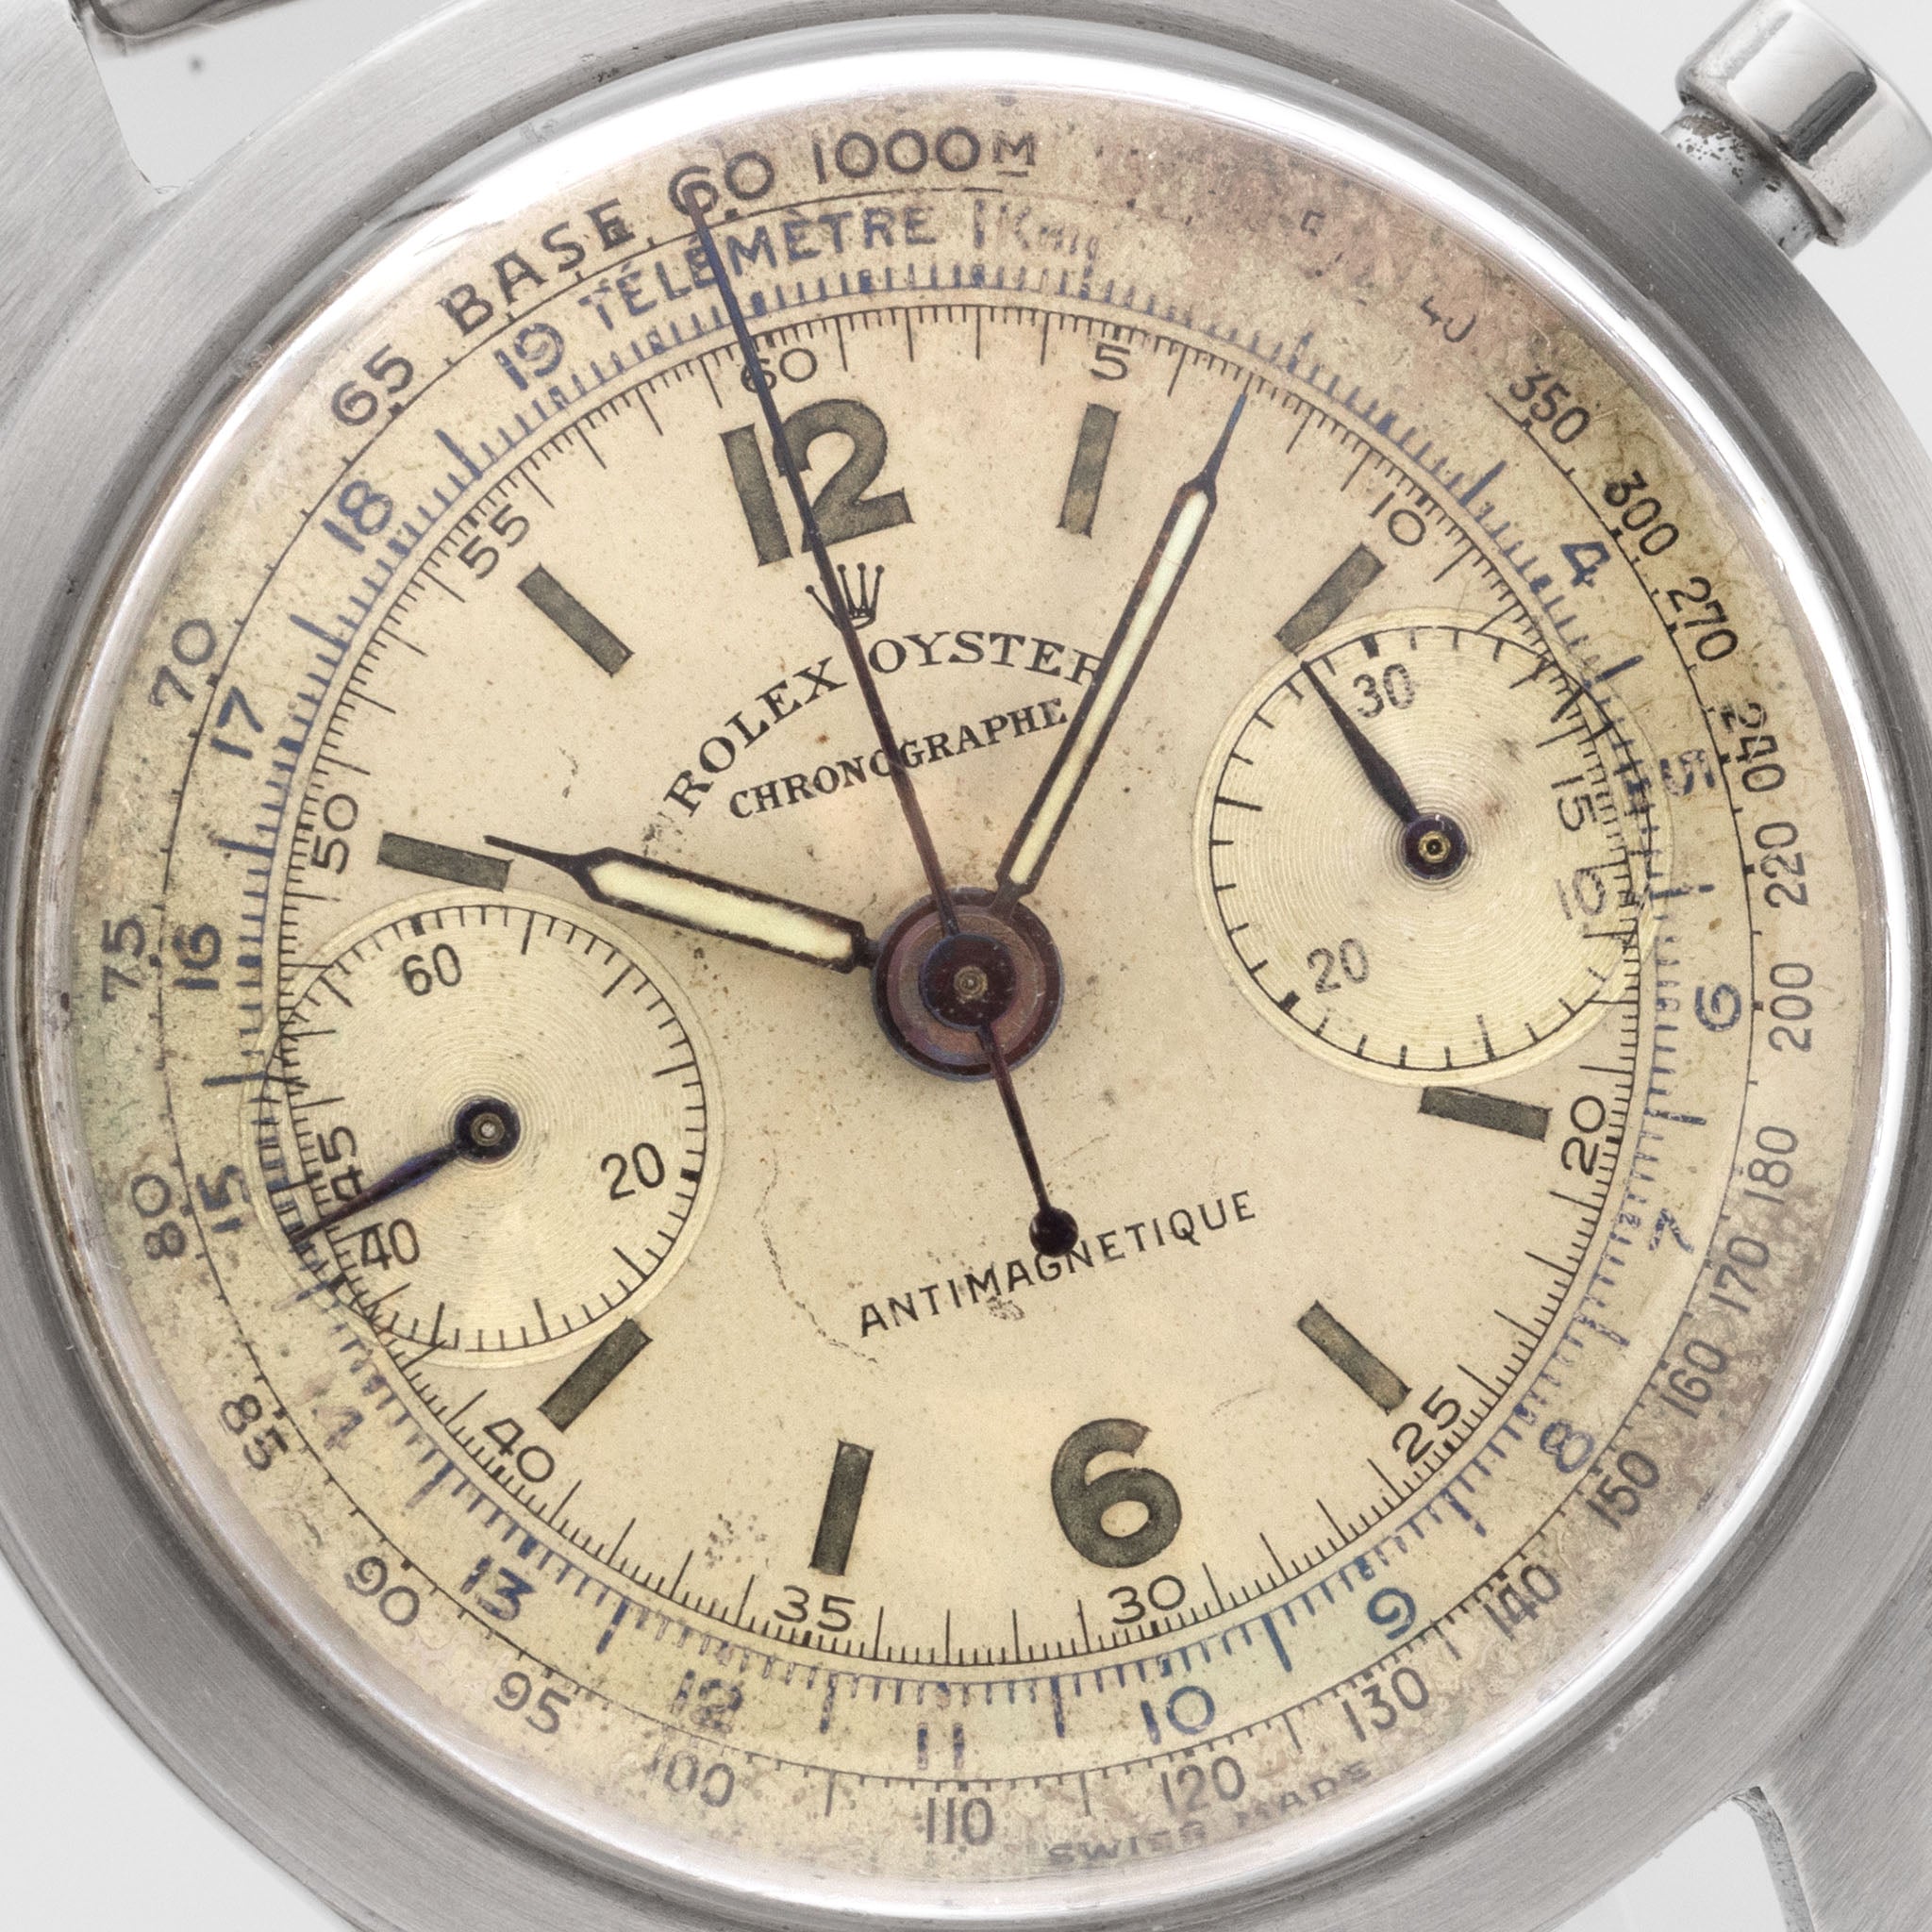 Rolex "Monoblocco" Chronograph Ref 3525